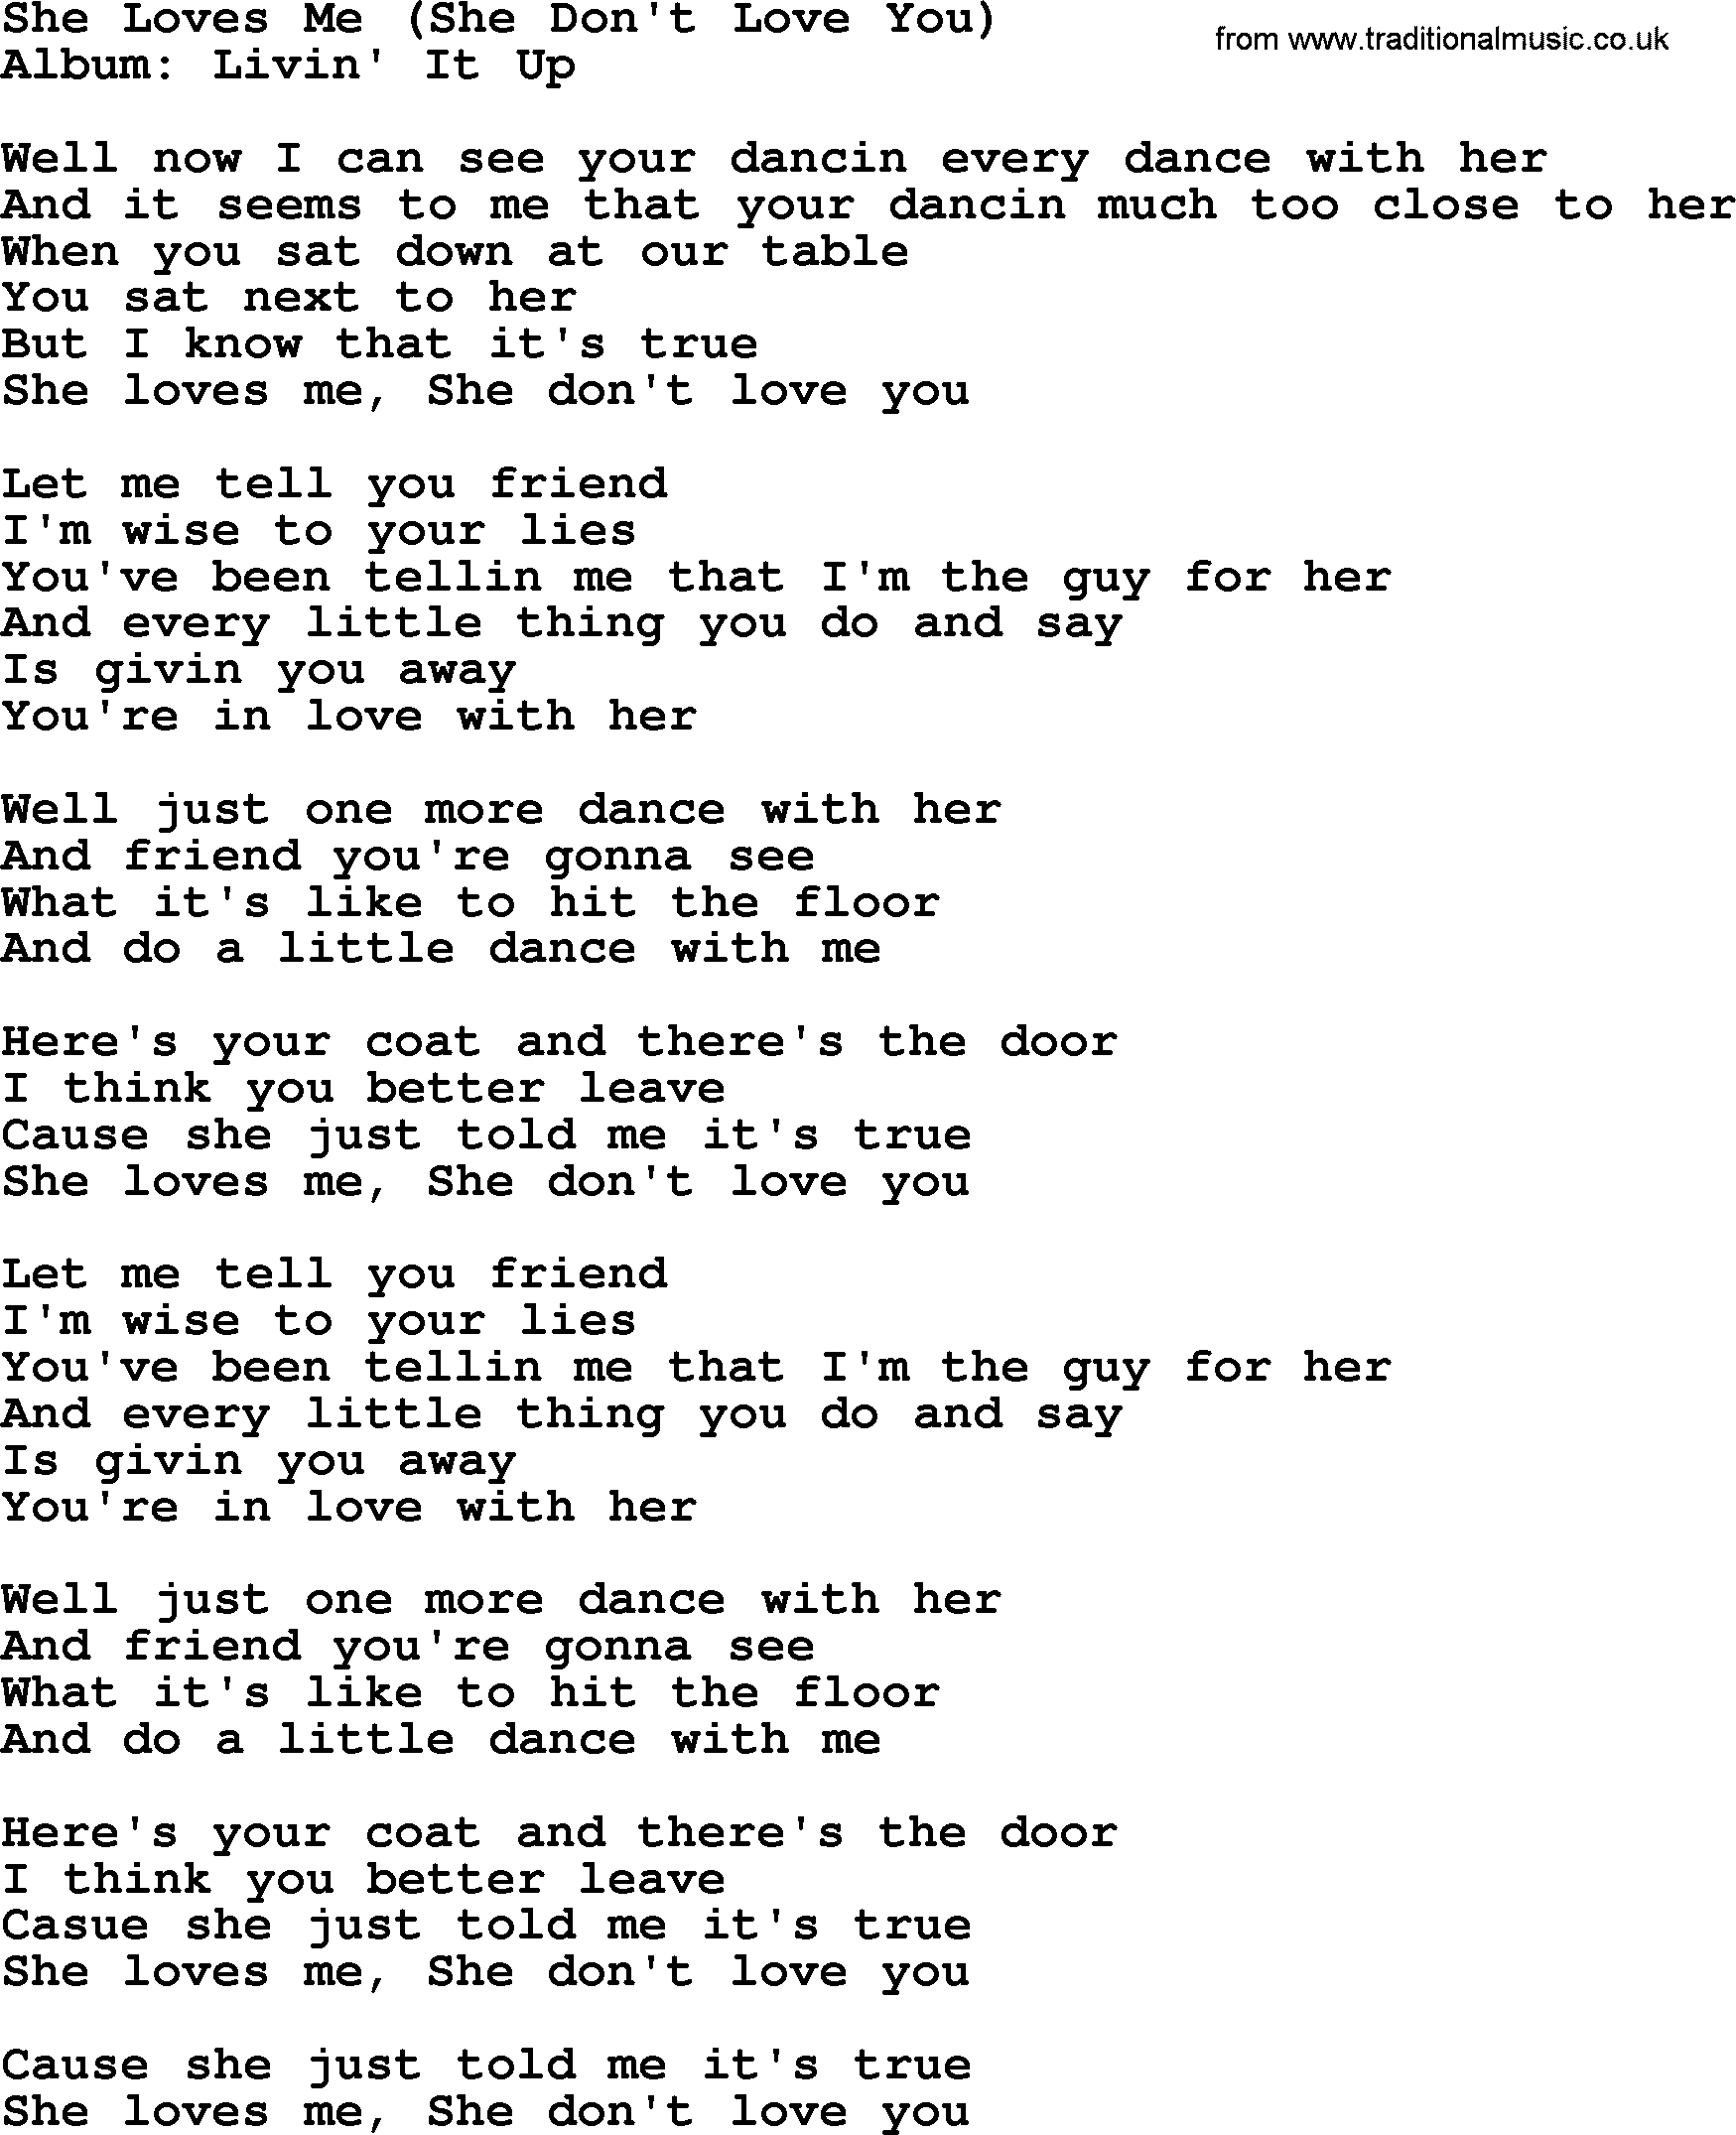 George Strait song: She Loves Me (She Don't Love You), lyrics